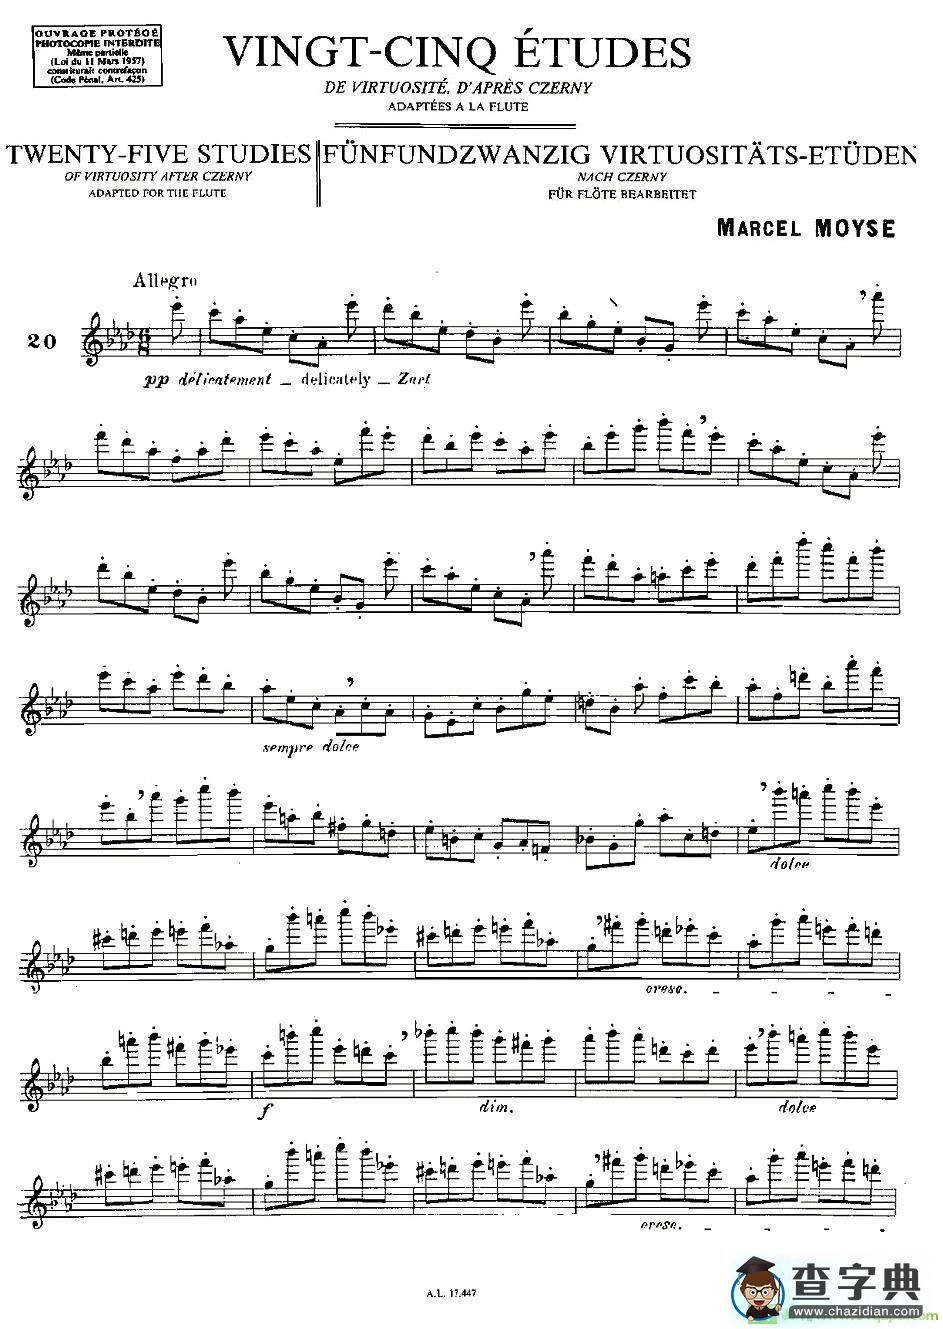 Moyse - 25 Studies after Czerny flute 之20长笛谱(Moyse作曲)